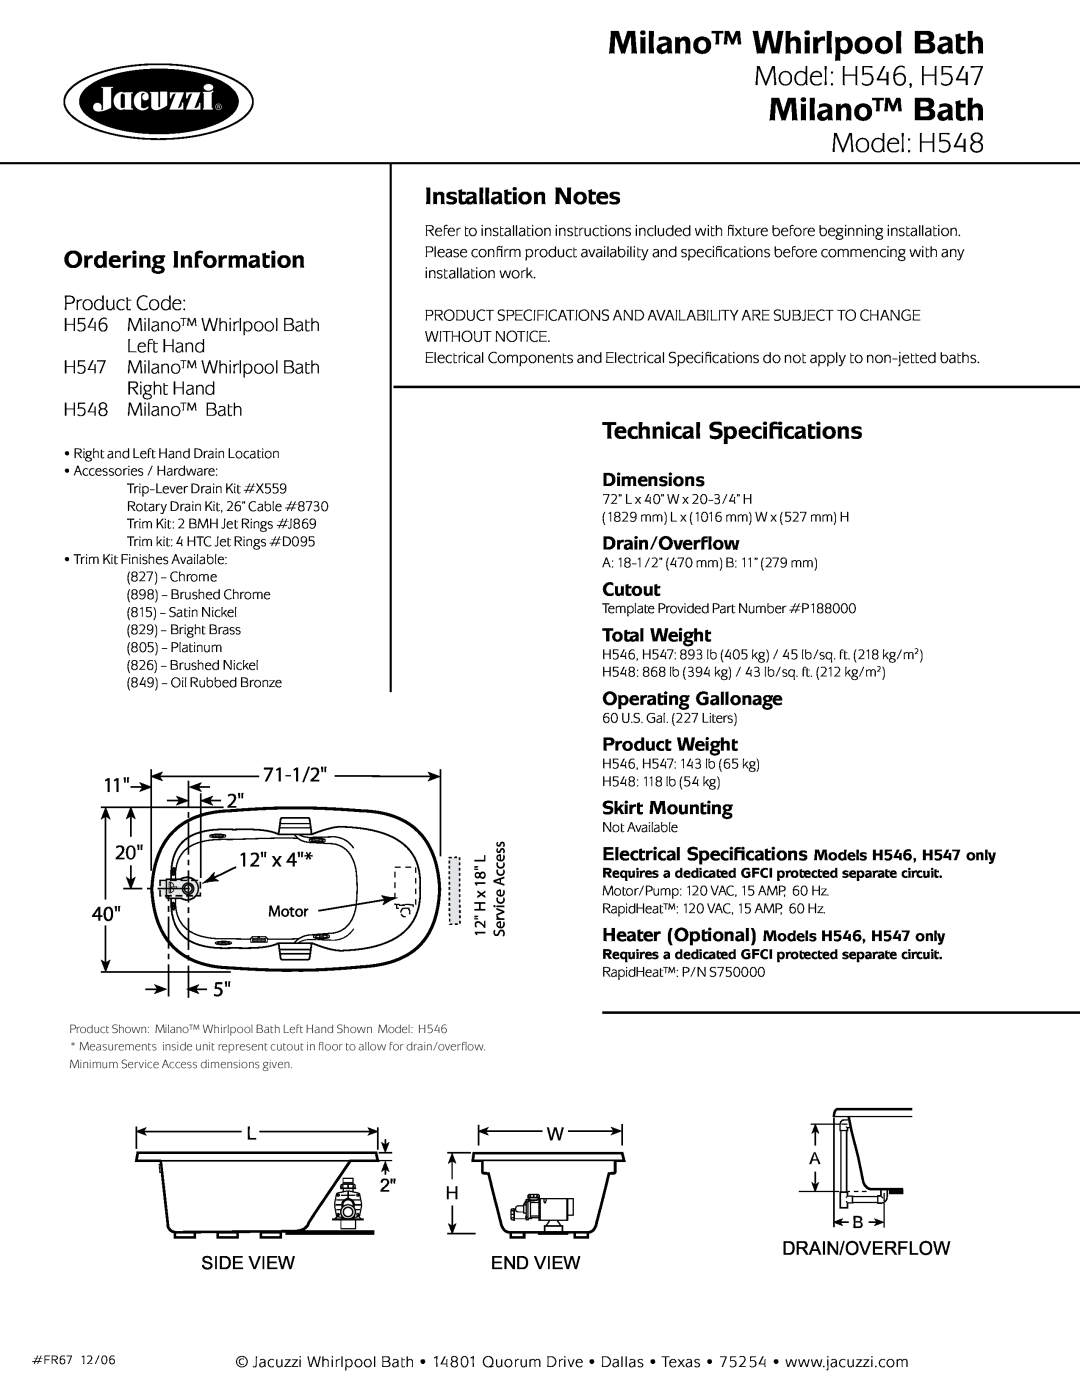 Jacuzzi Milano Whirlpool Bath, Milano Bath, Model H546, H547, Model H548, Ordering Information, Installation Notes 